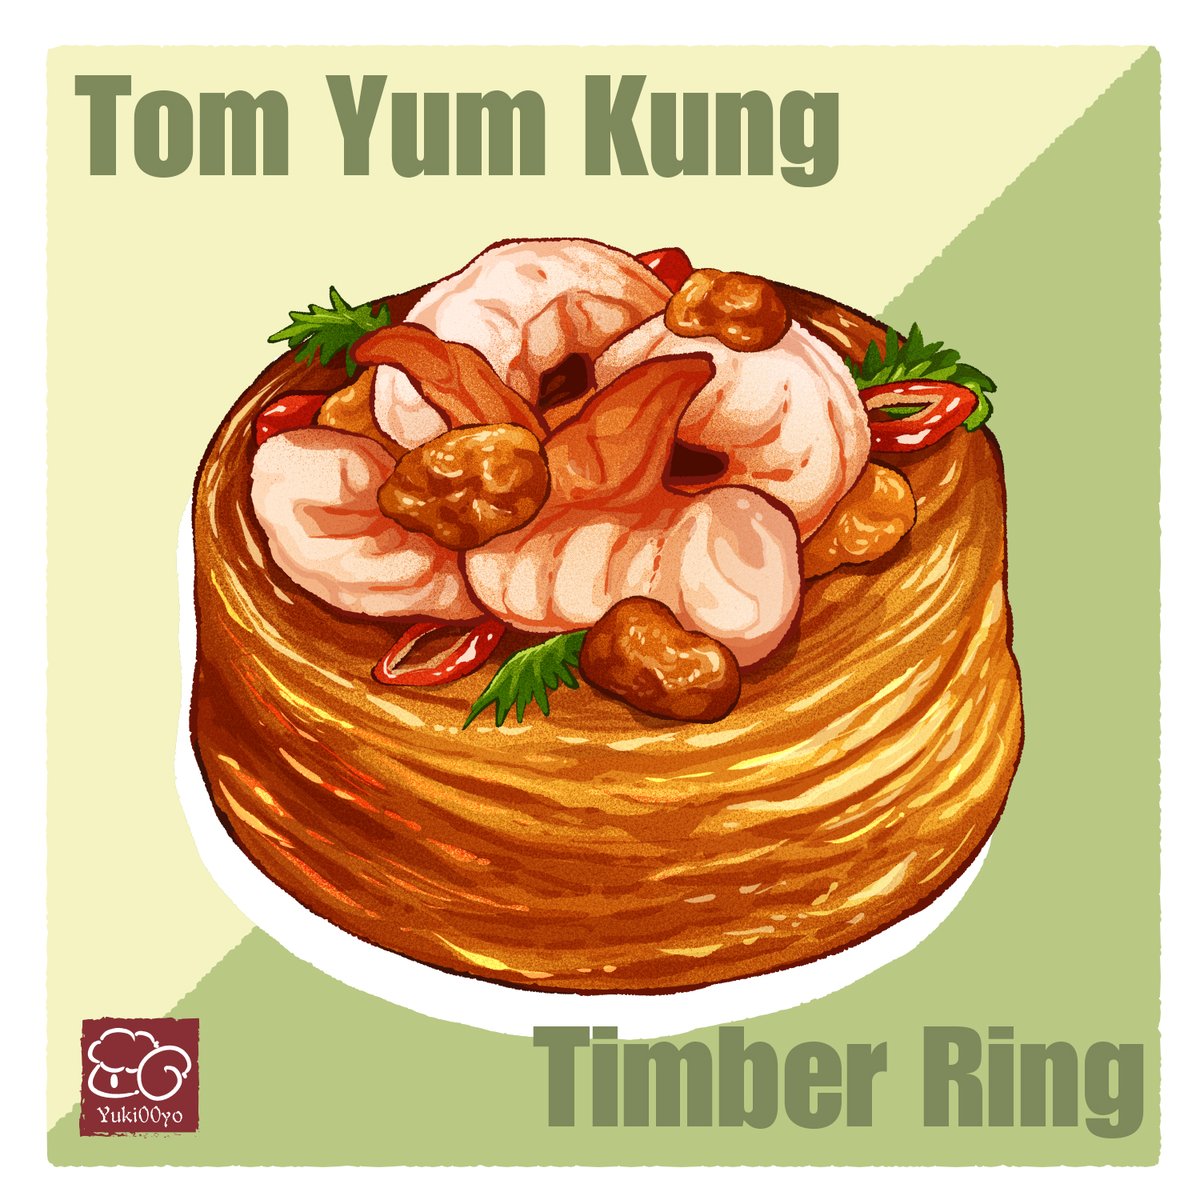 Tom Yum Kung Timber Ring

=================
#foodart #foodillustration
#foodartist
#illustration #絵 #イラスト #dessert
#食べ物イラスト
#美食插畫 #食物繪畫 #TimberRing #pippin #pippincafepattaya
#TimberRingcroissants #TomYumKung #croissants